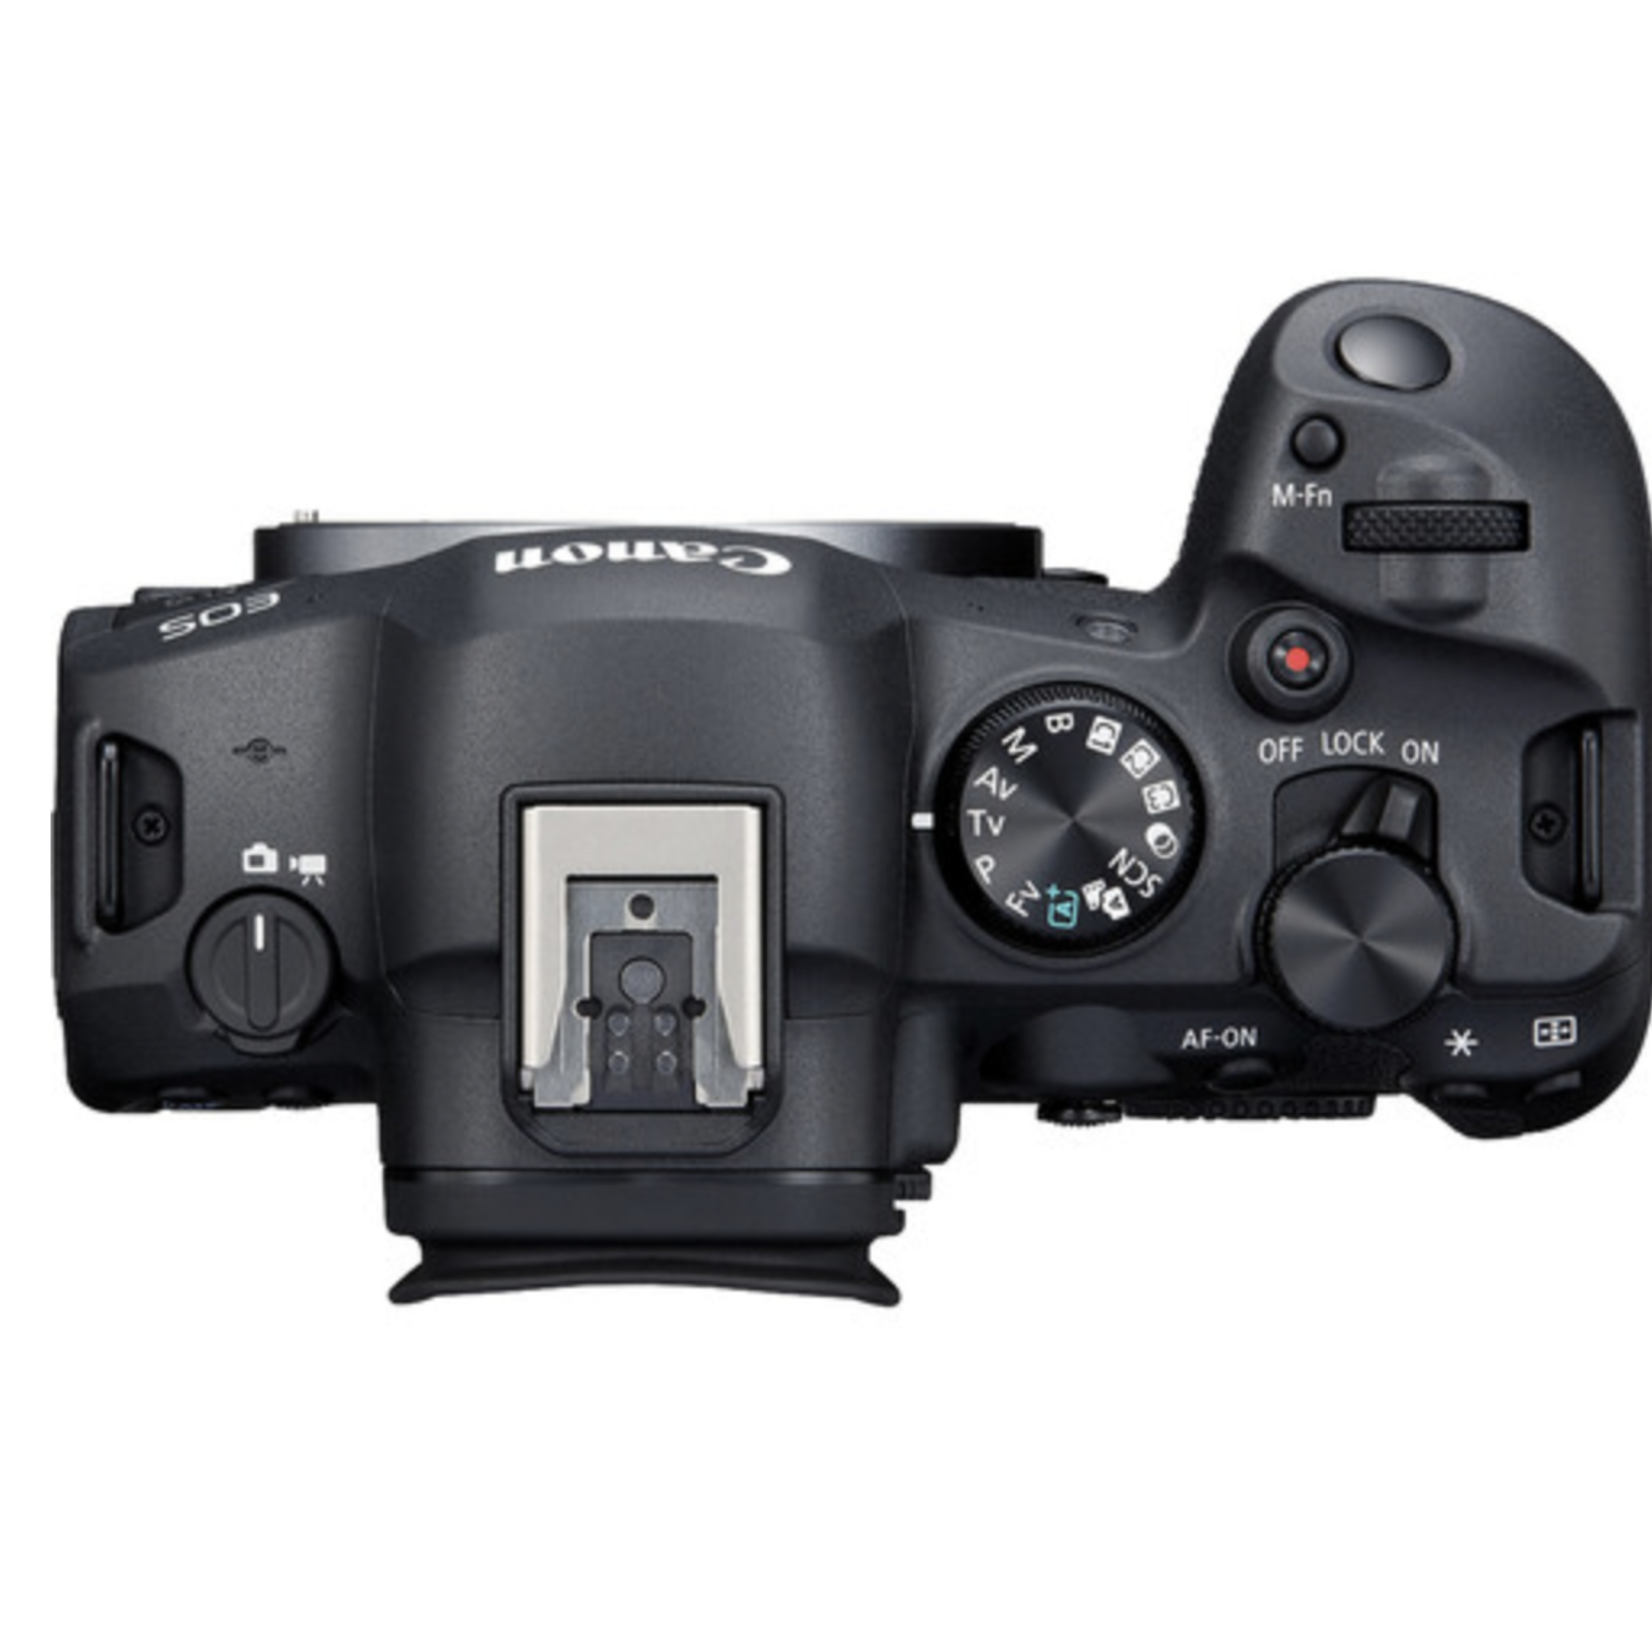 Canon Canon EOS R6 Mark II Mirrorless Camera